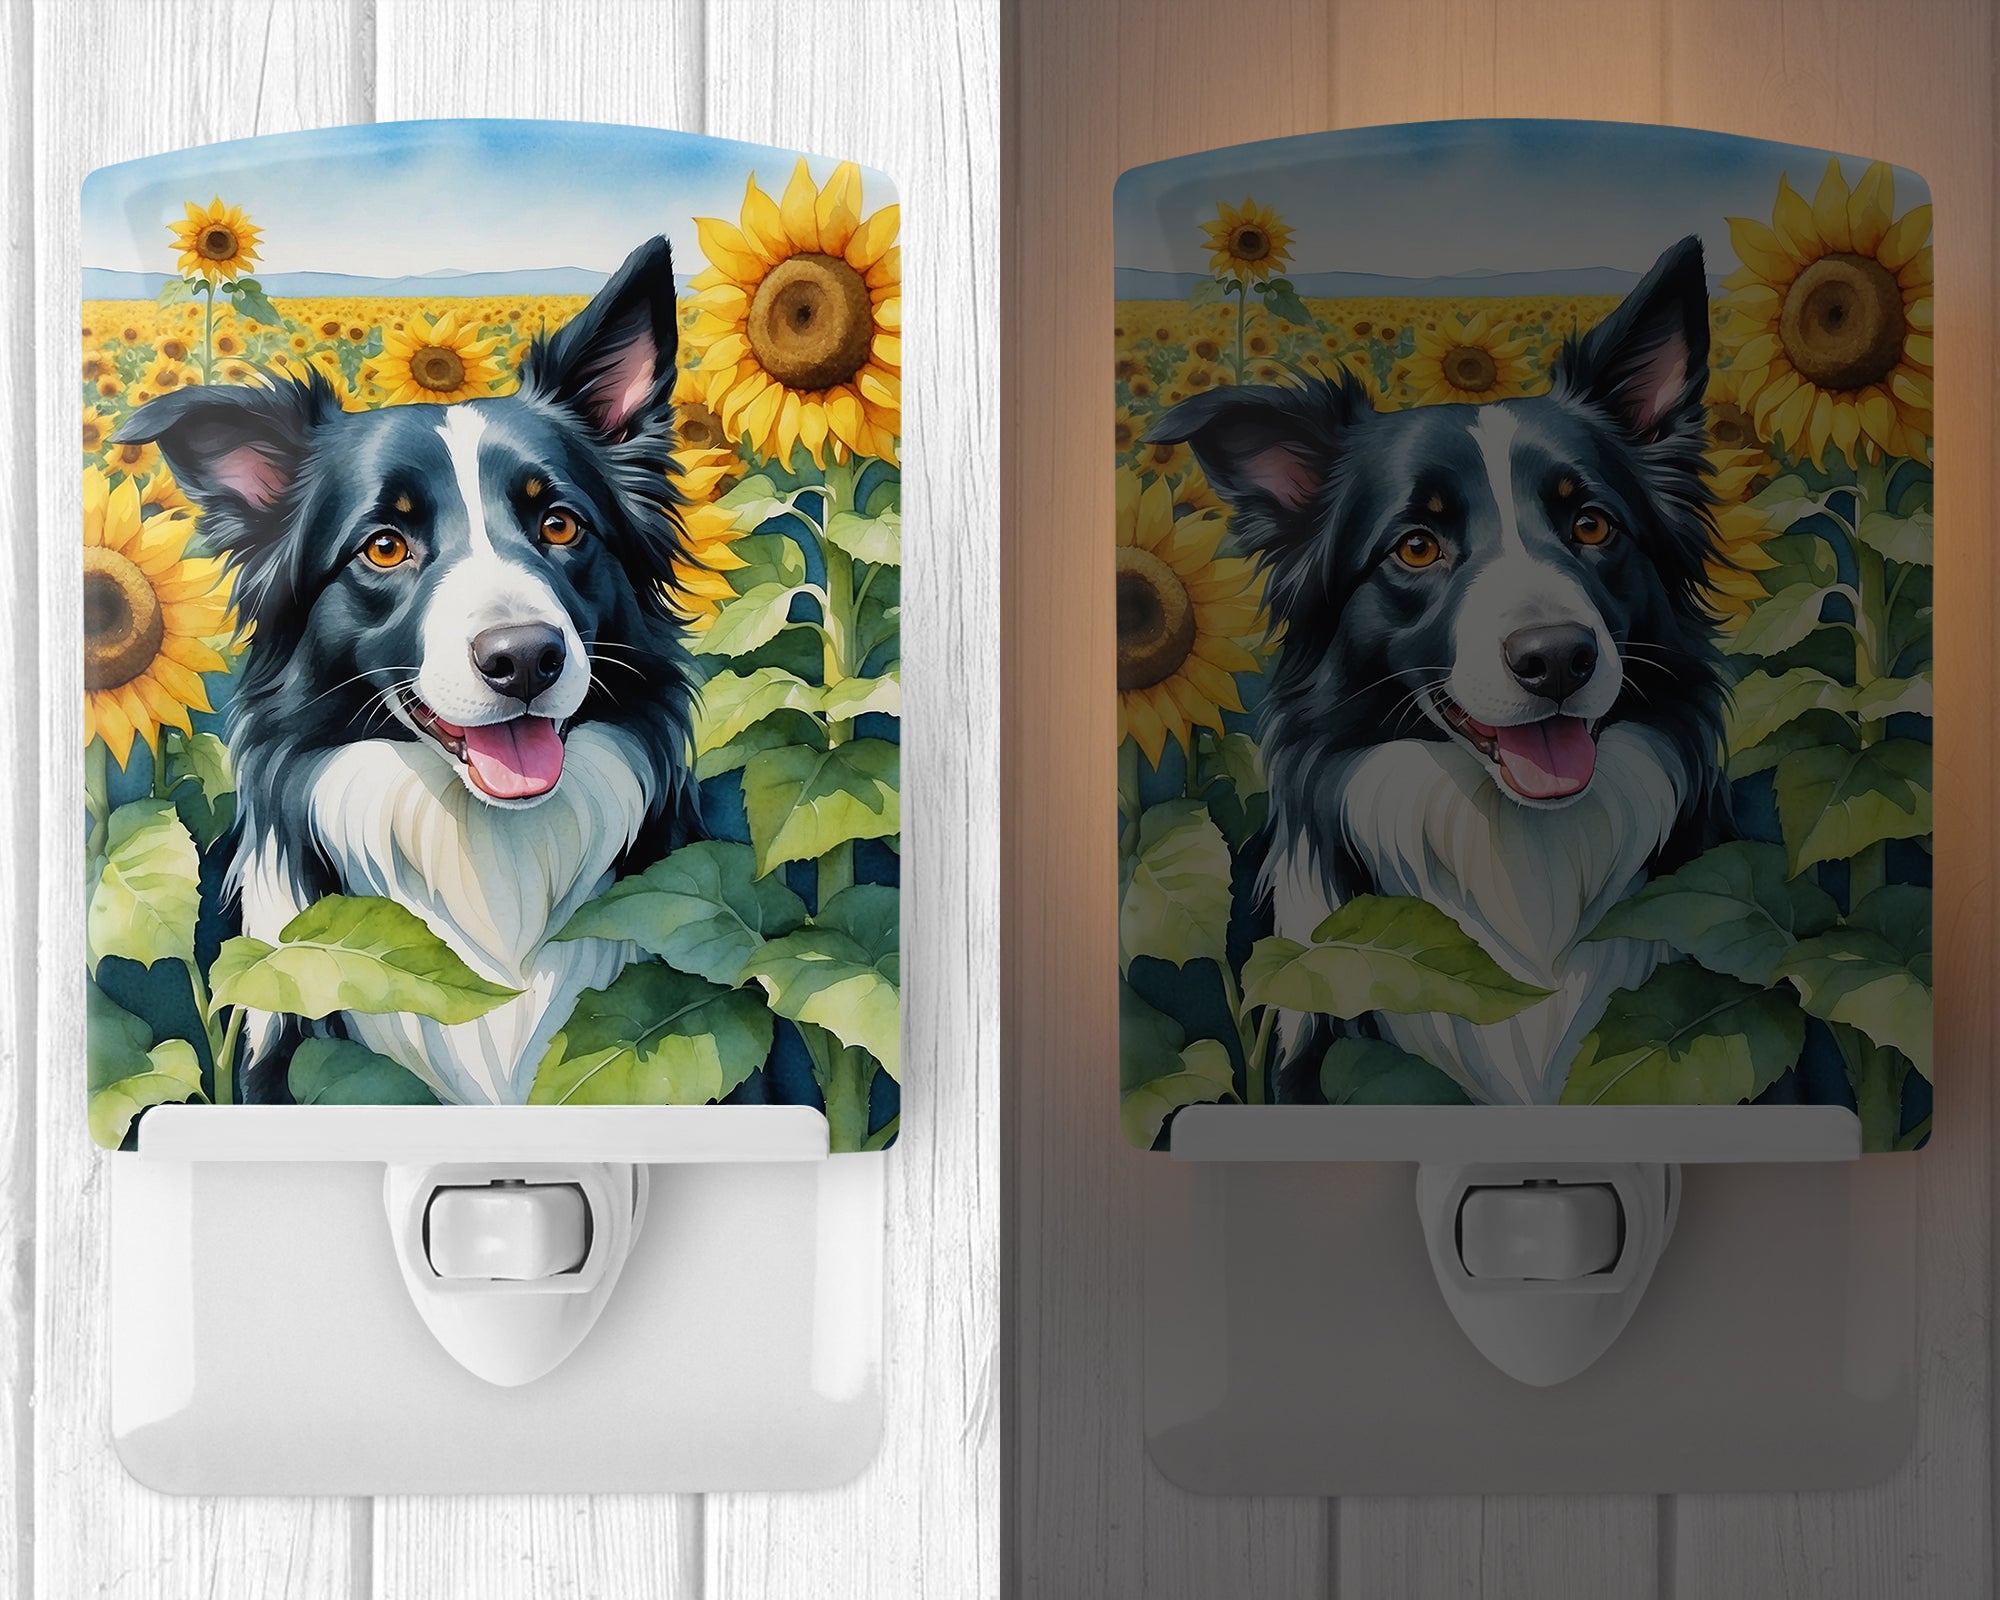 Buy this Border Collie in Sunflowers Ceramic Night Light